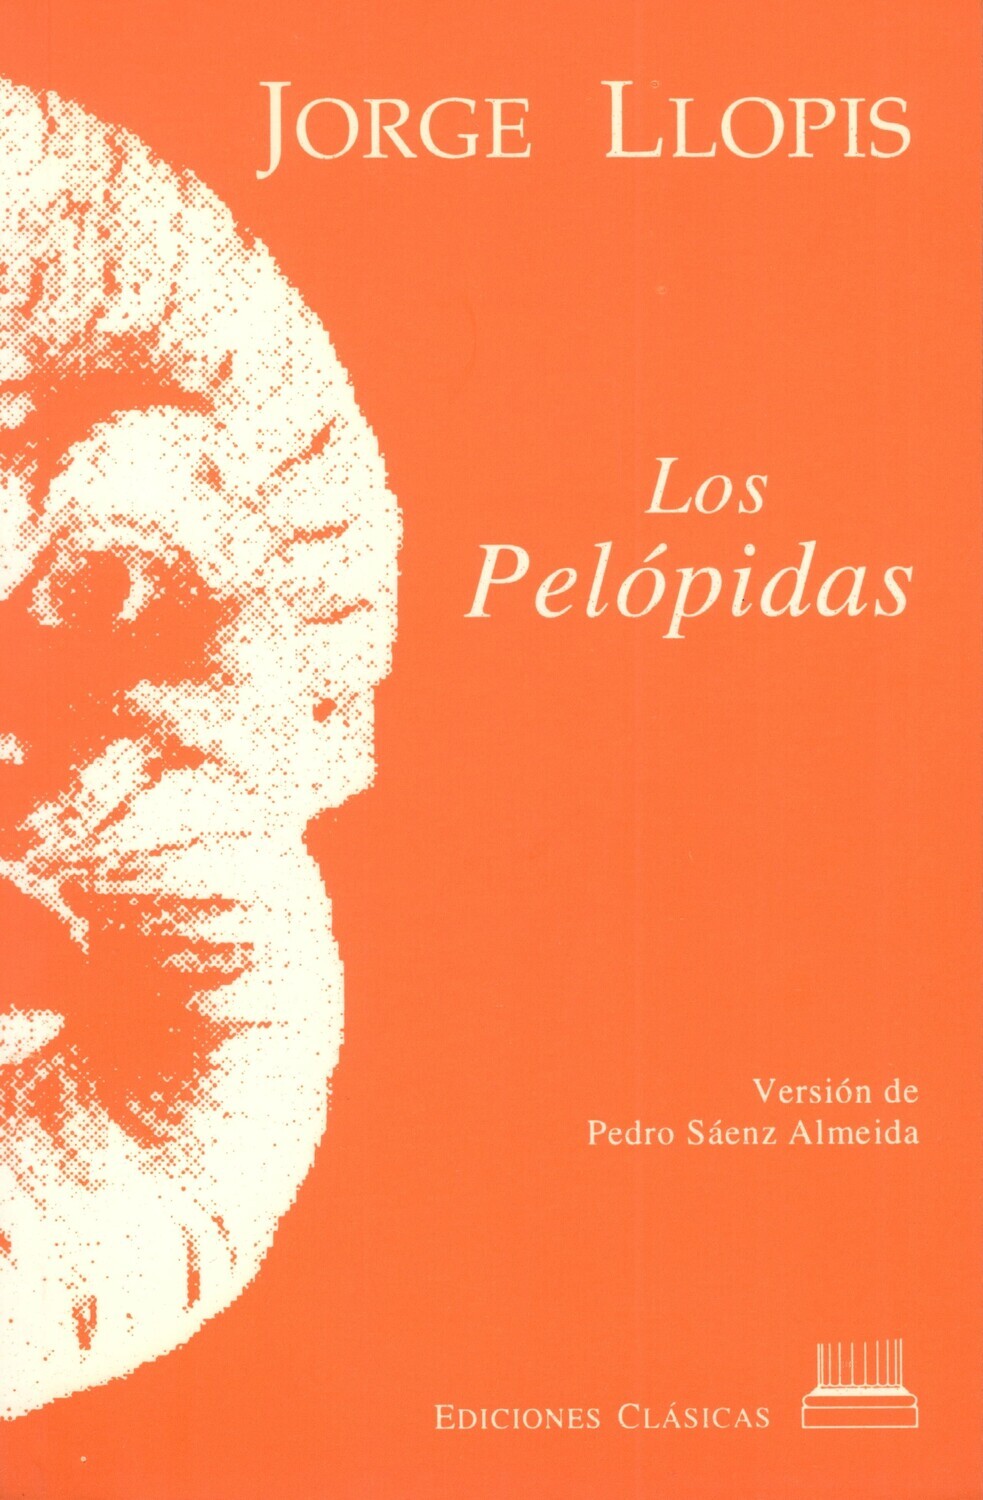 LOS PELÓPIDAS (JORGE LLOPIS)